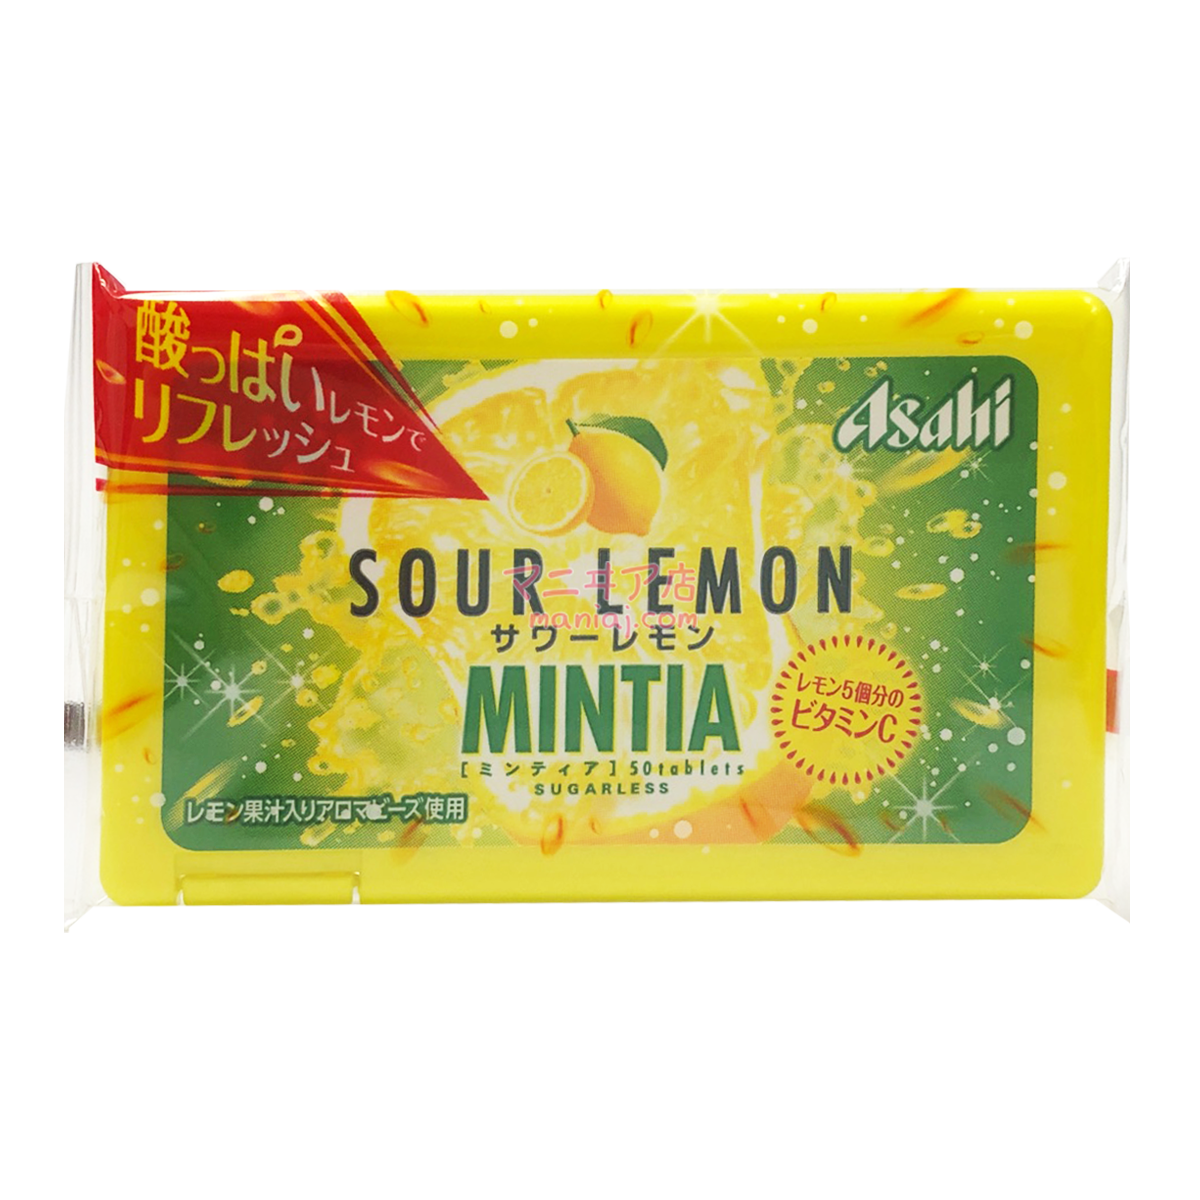 MINTIA酸檸檬薄荷糖